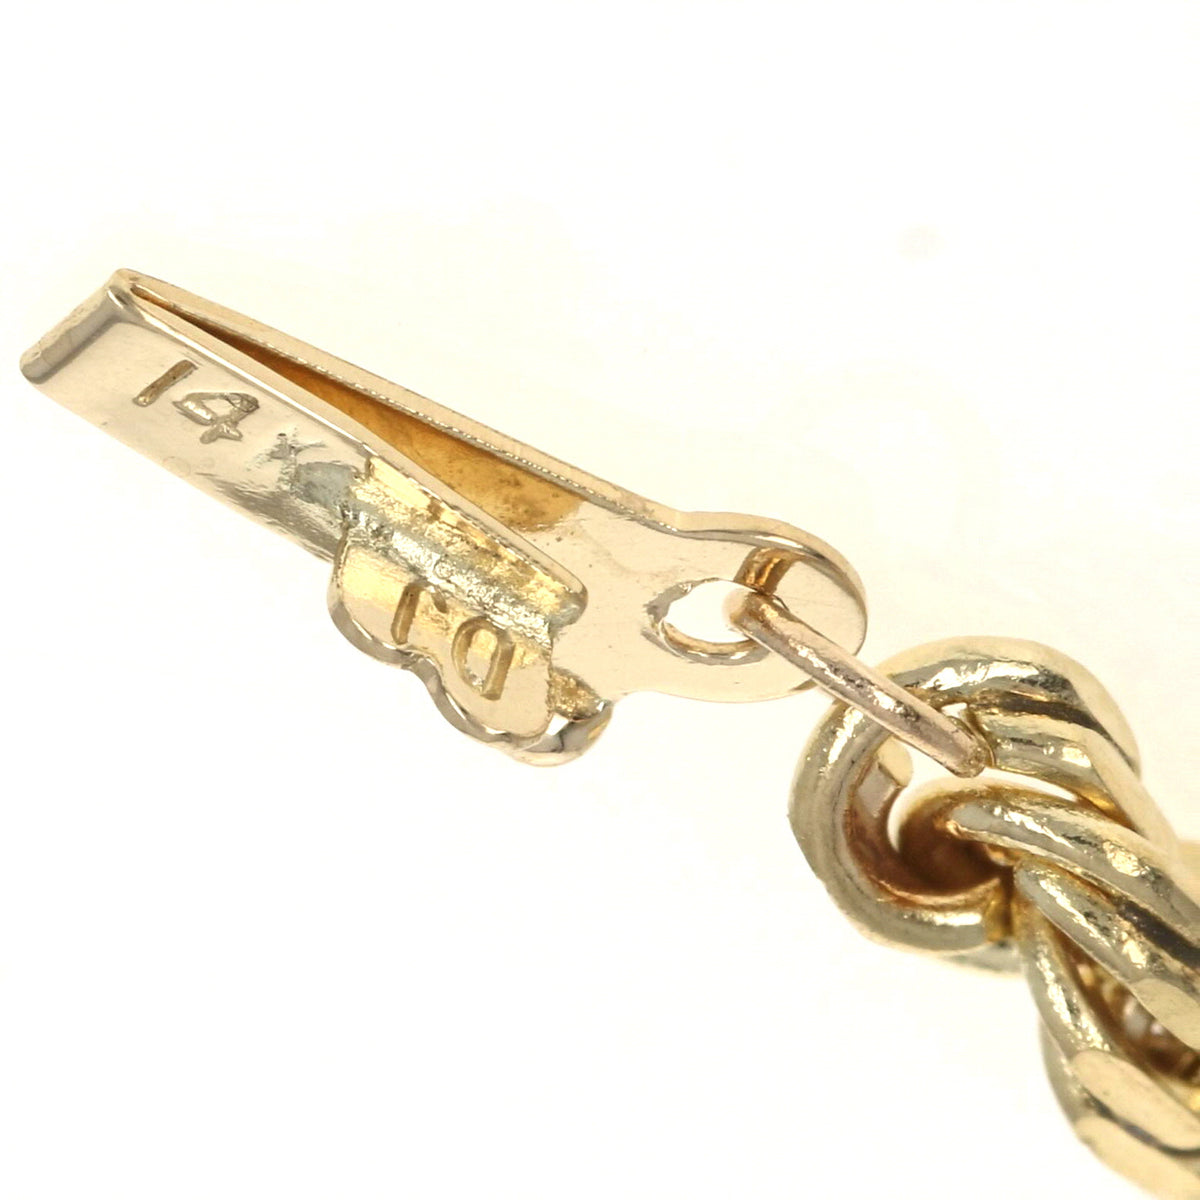 Diamond Cut Rope Chain Bracelet Yellow Gold